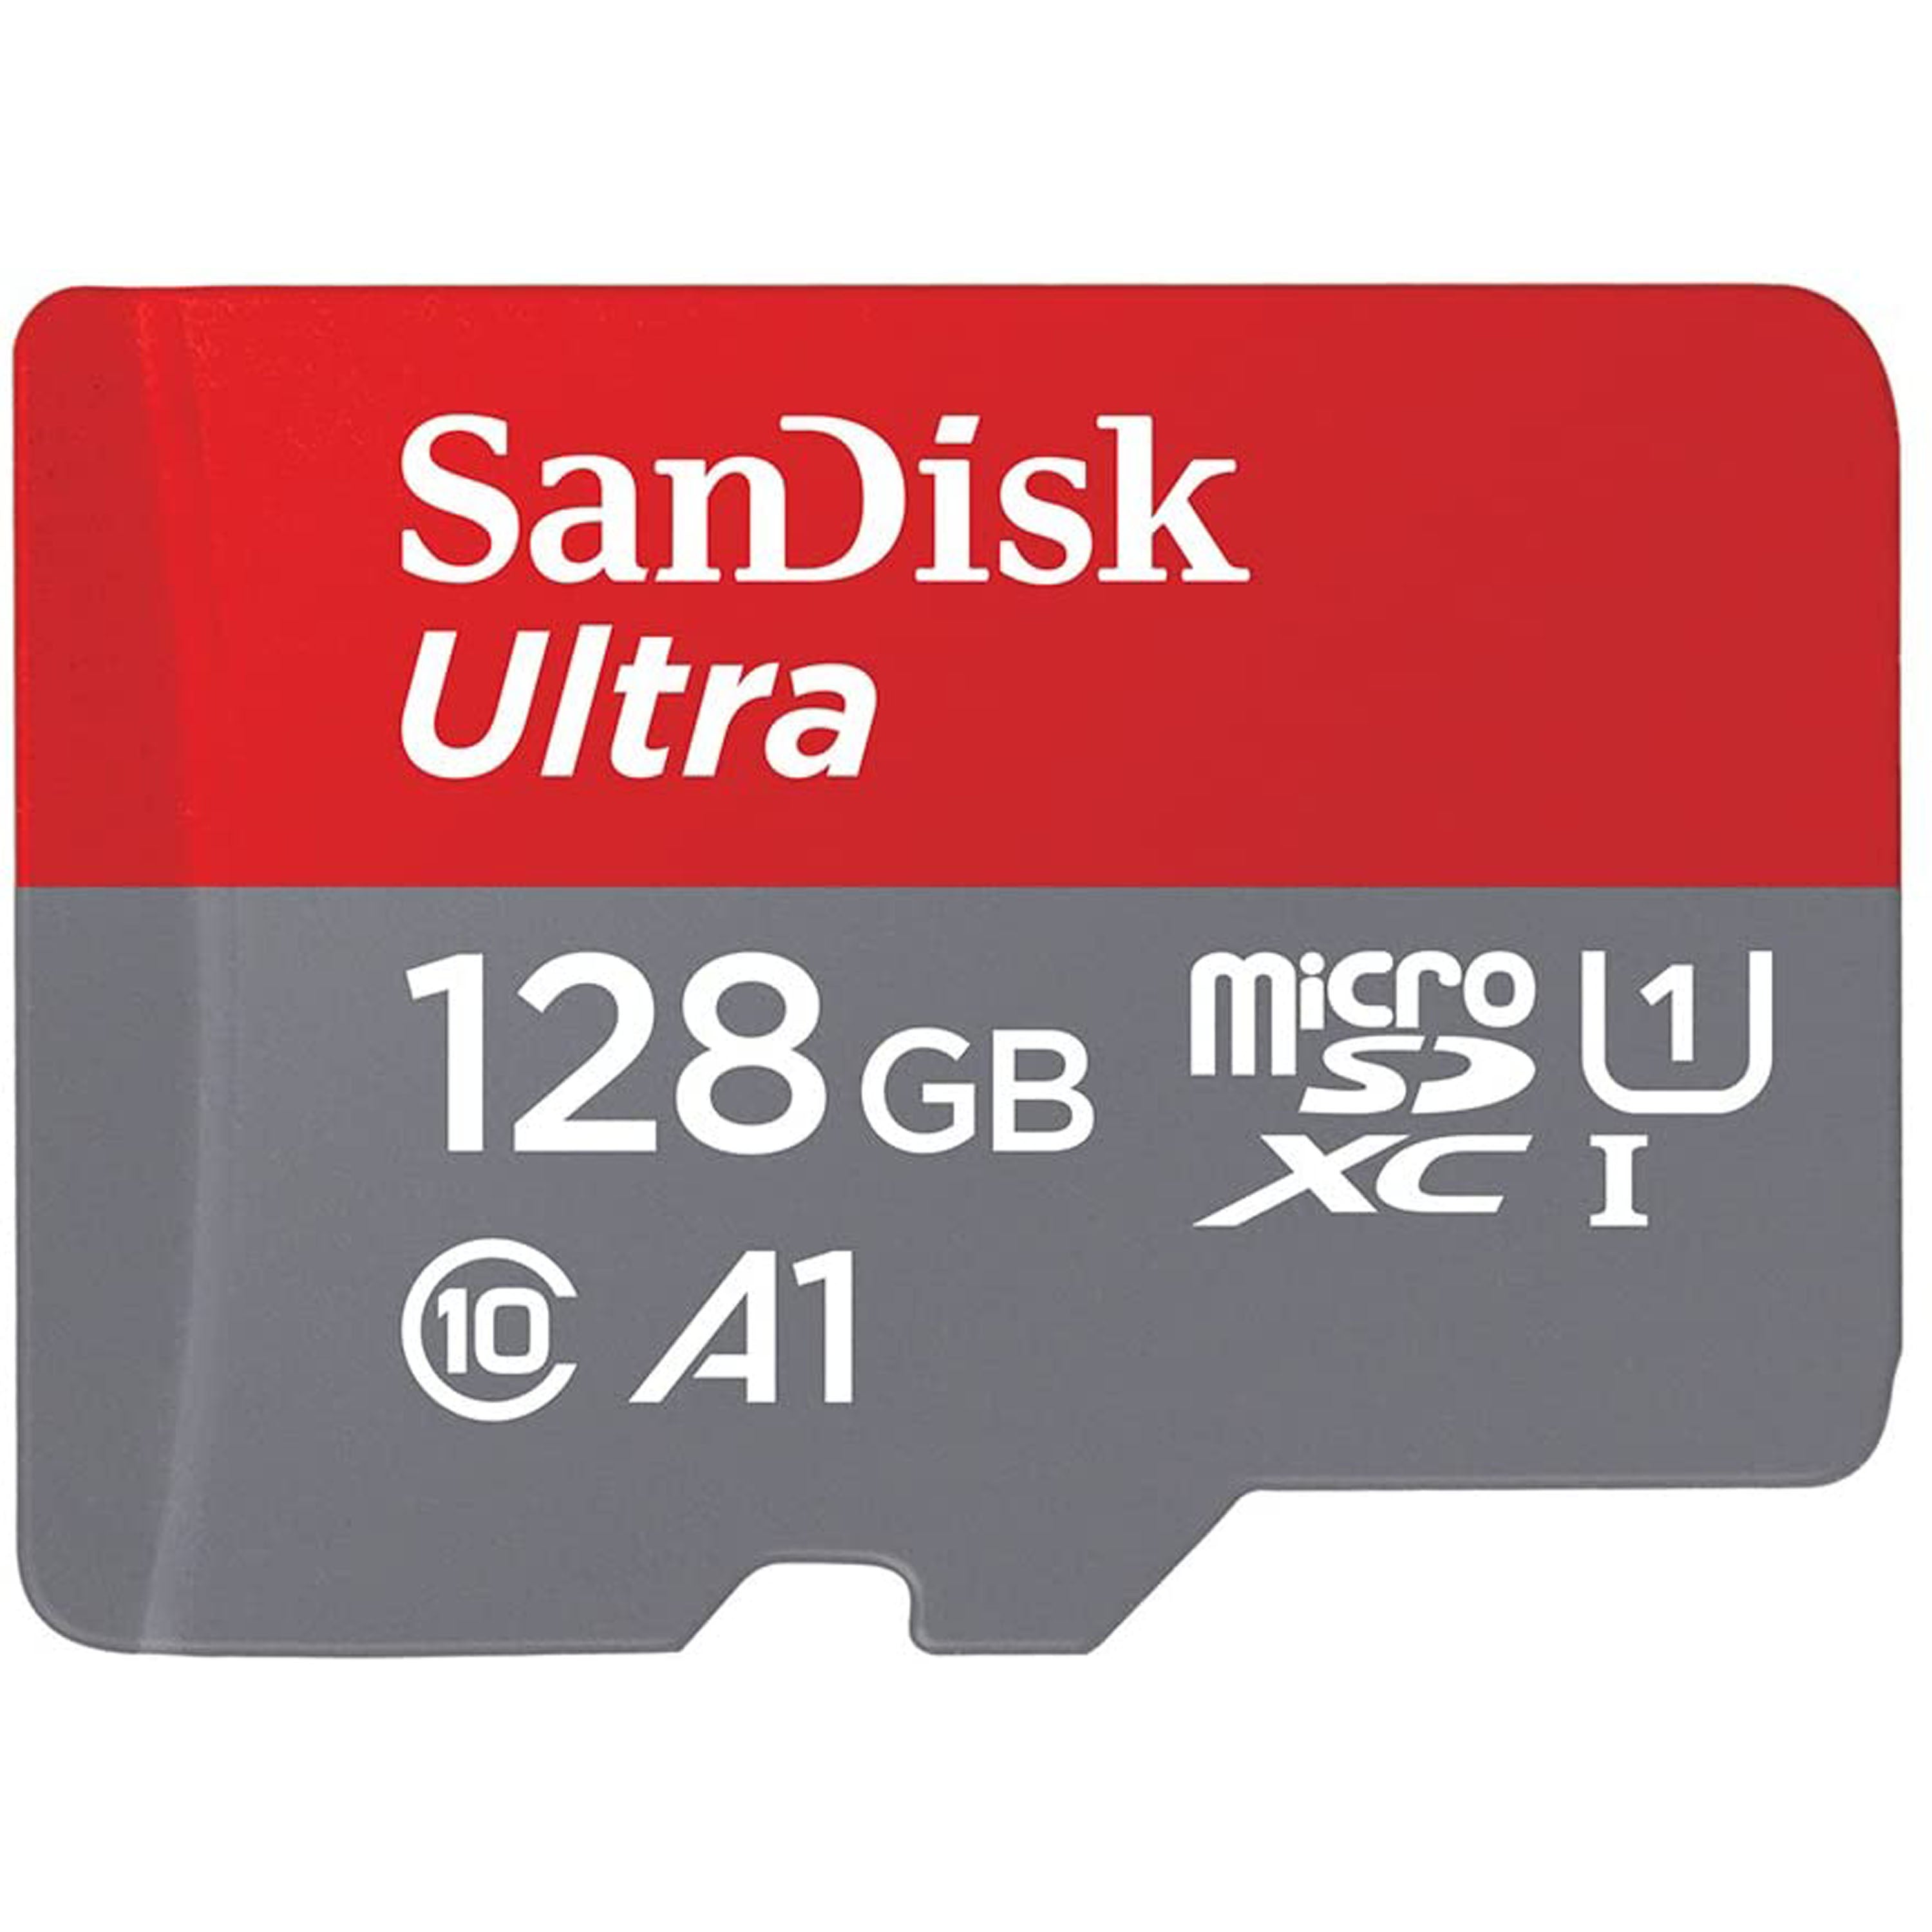 Sandisk Ultra MicroSDXC 128GB 120MB/s UHS-I